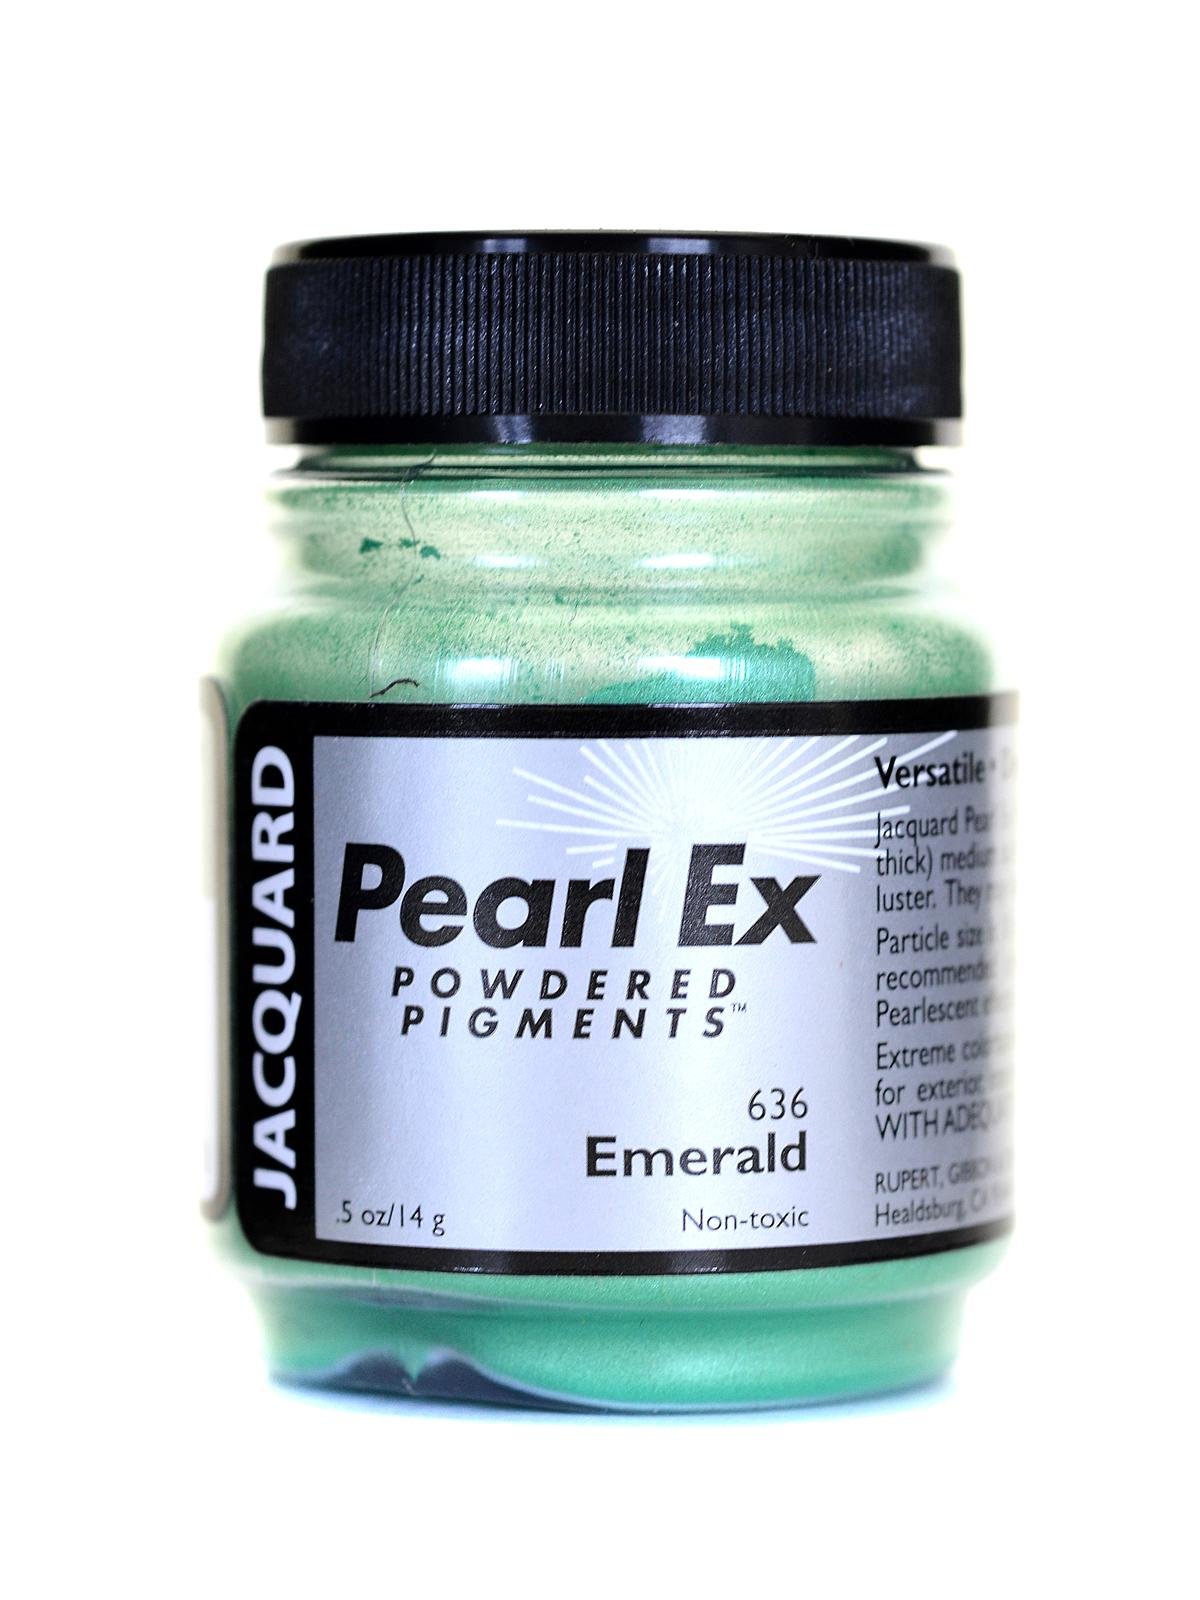 Jacquard Pearl Ex 696 DUO BLUE-PURPLE Powdered Pigments 3 Gram Jar